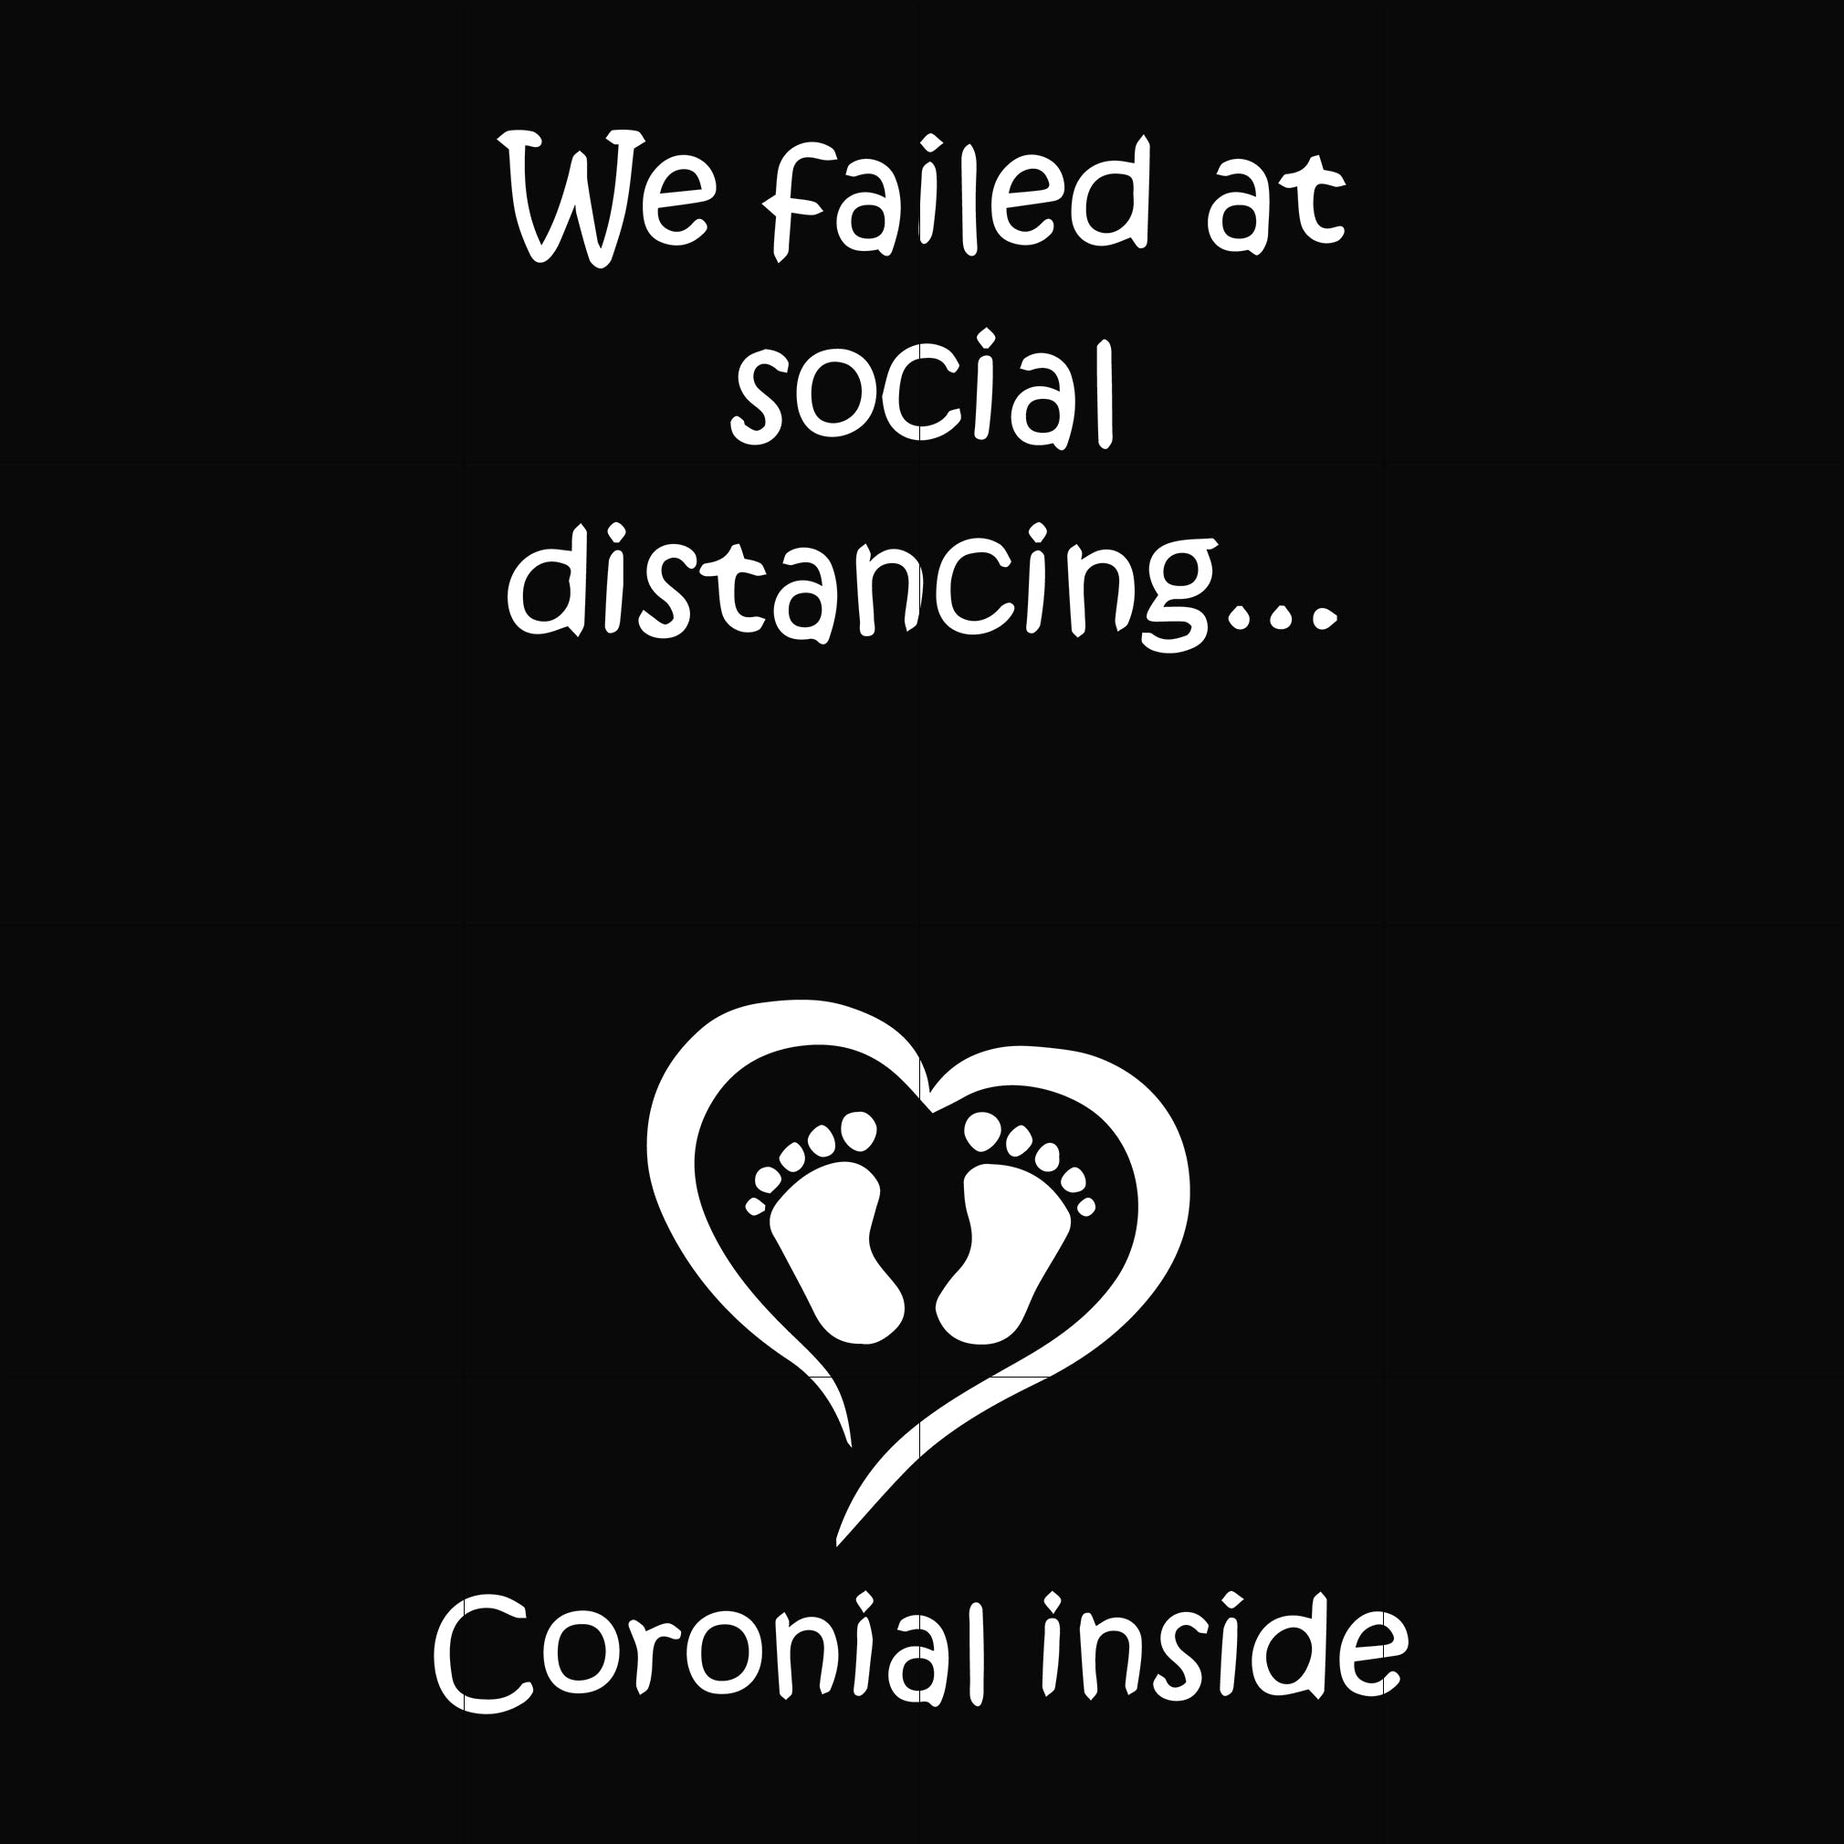 We failed at social distancing Corona inside svg, png, dxf, eps digital file TD27072036